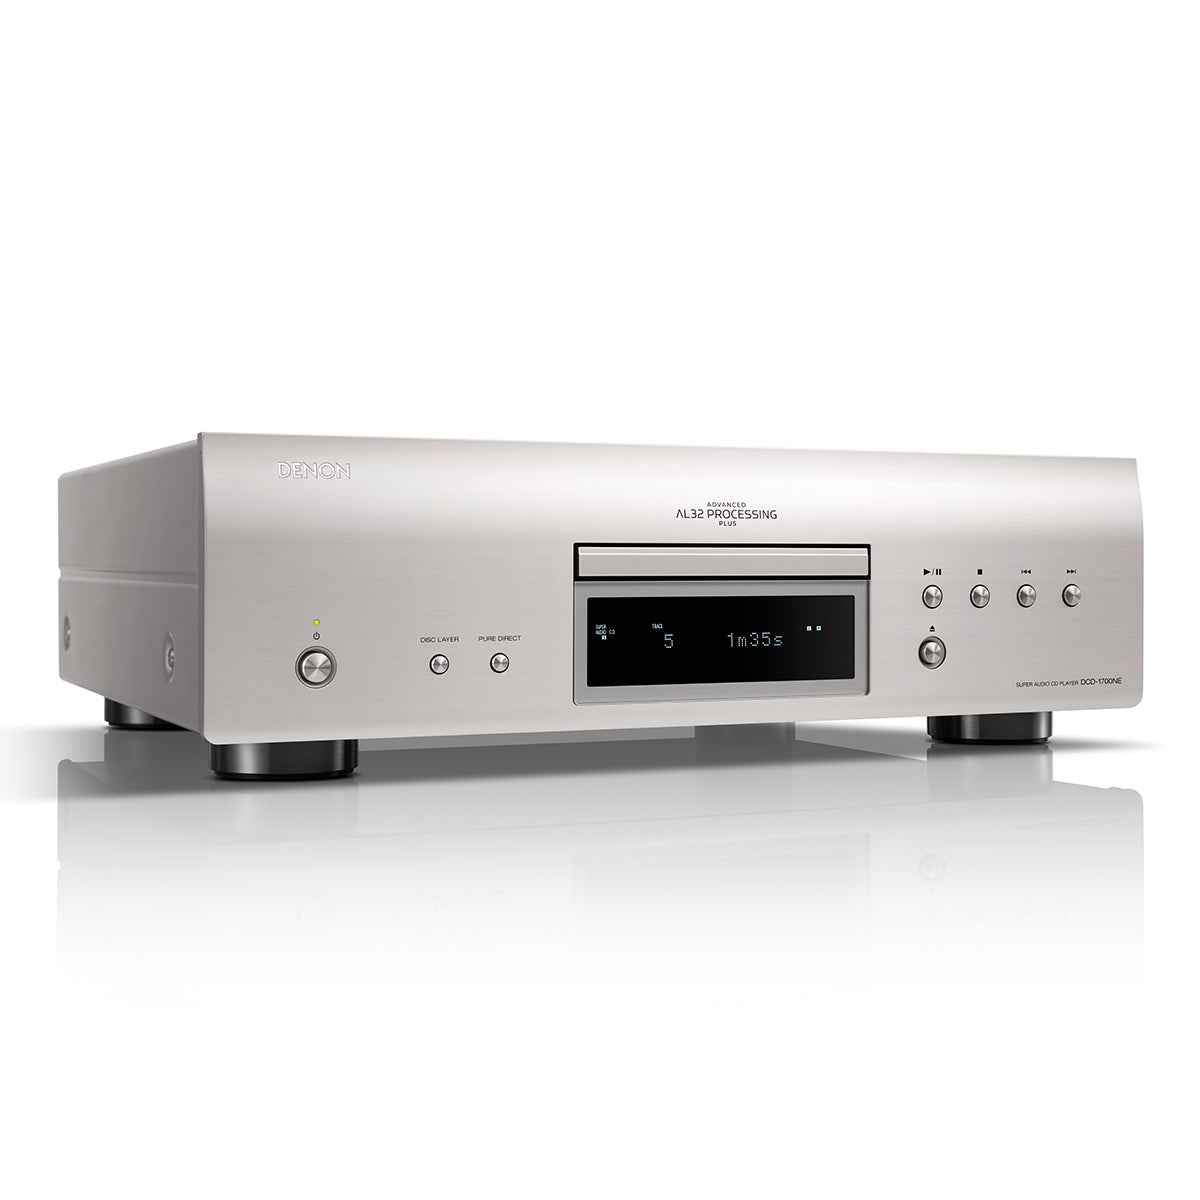 Denon DCD-1700NE CD/SACD Player with Advanced AL32 Processing Plus (Silver)